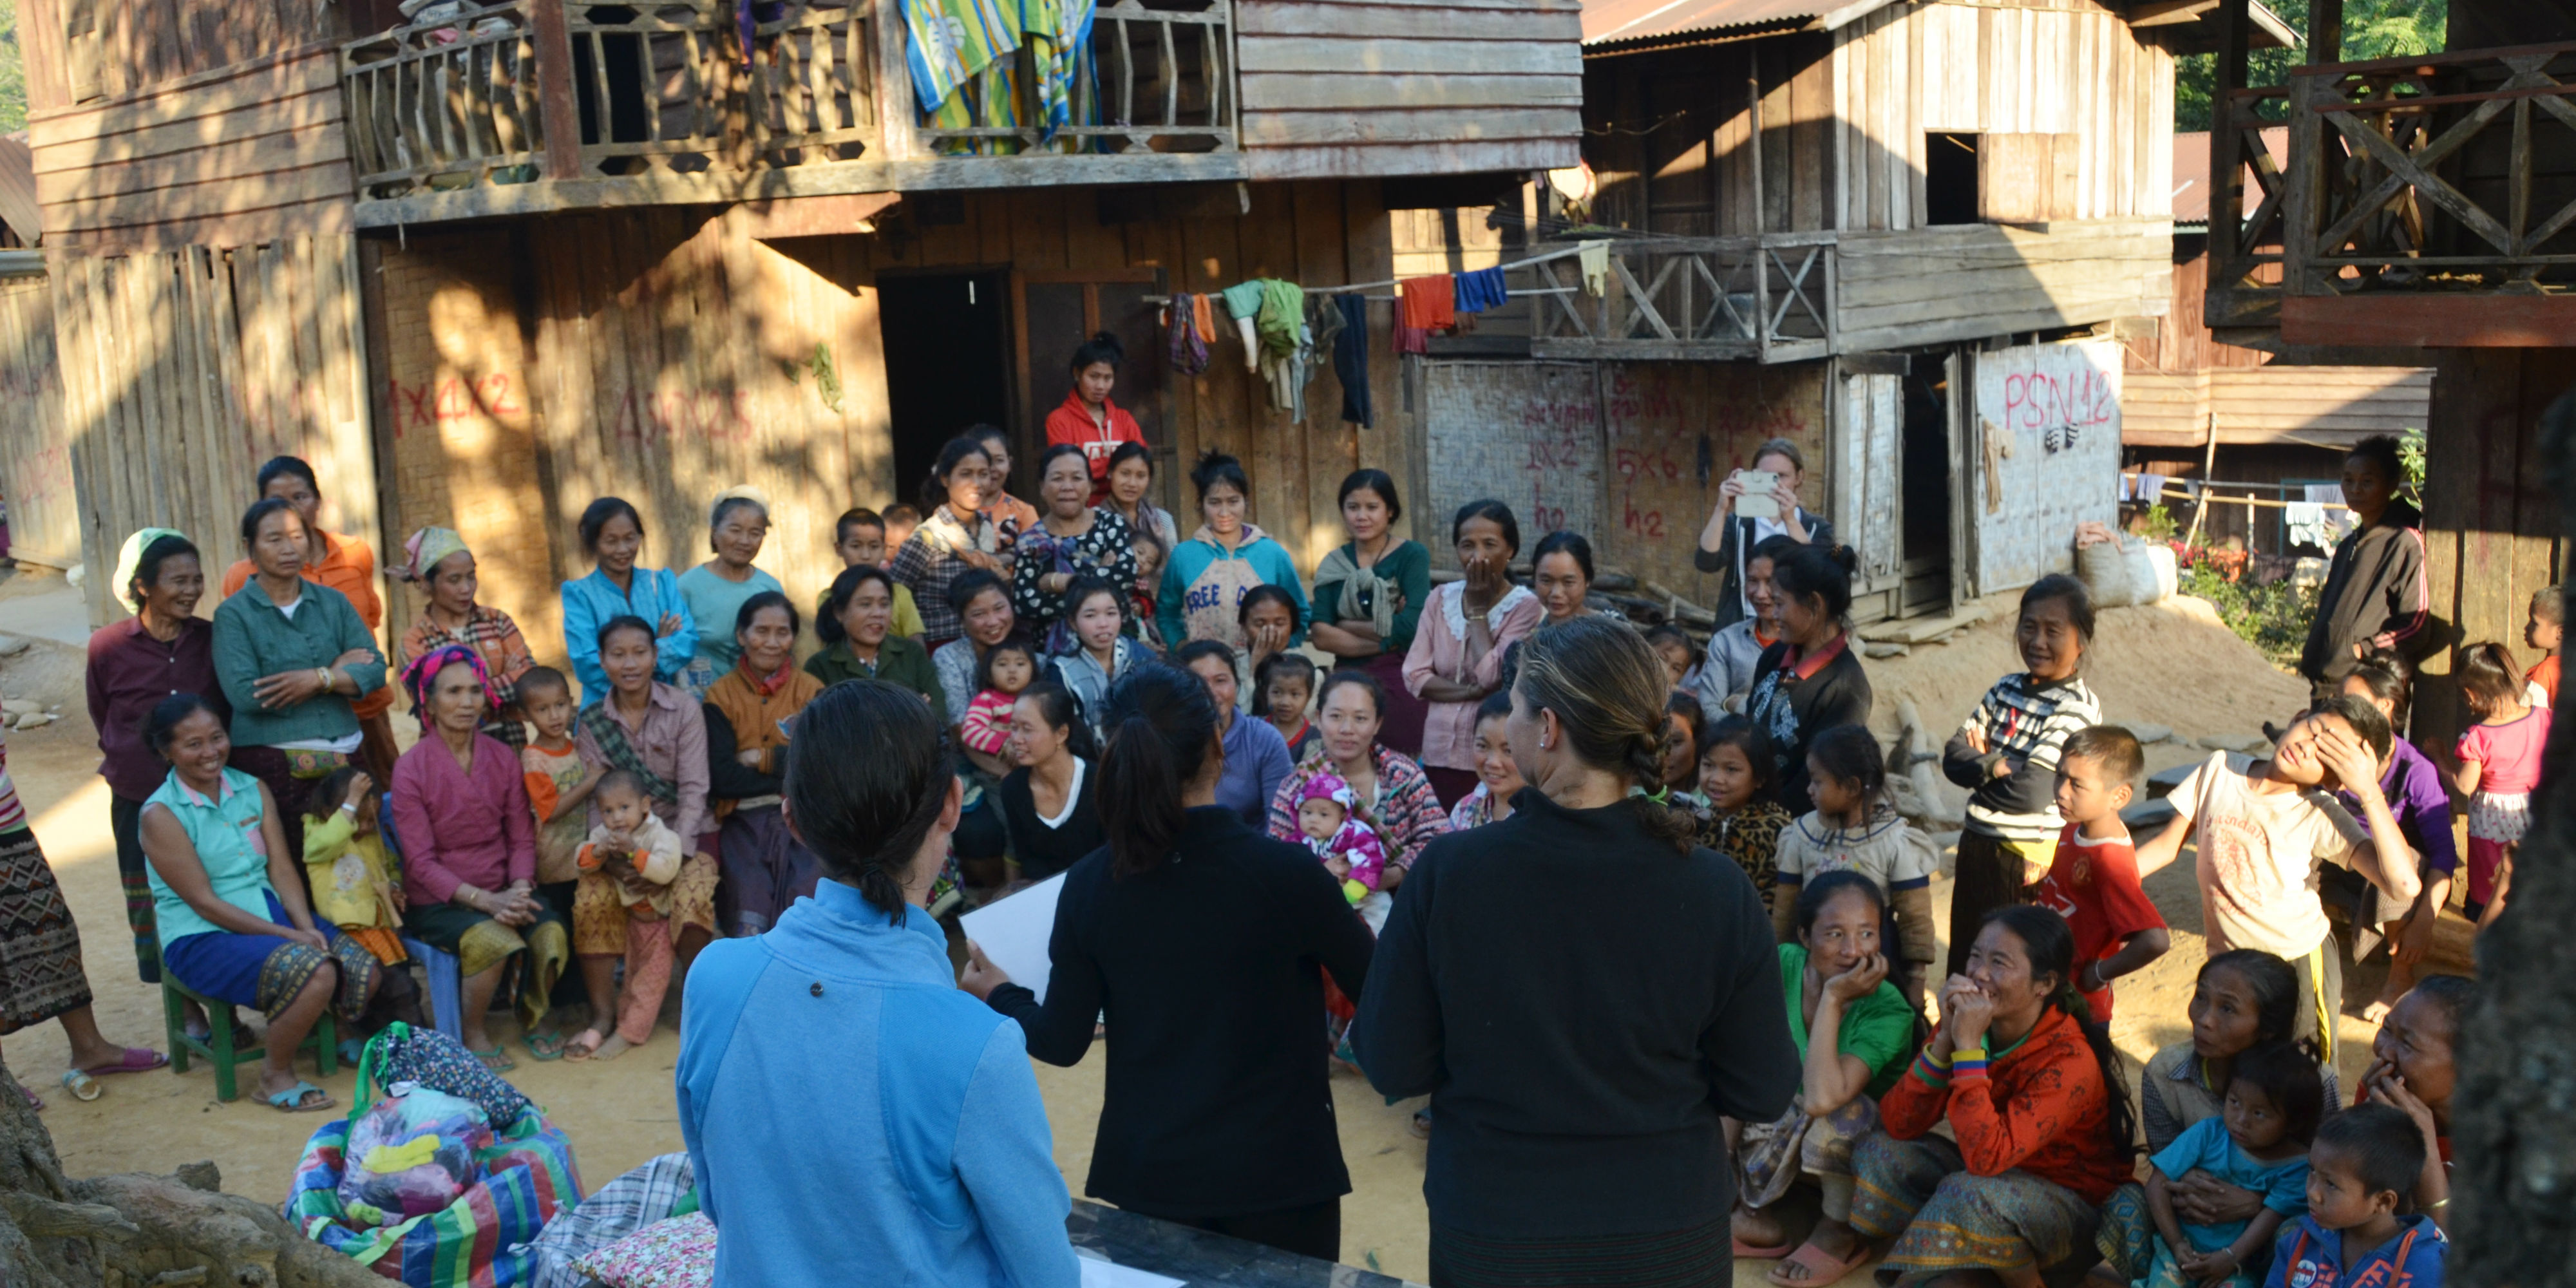 GVI participants help Laos women learn about menstration through a women's empowerment project.